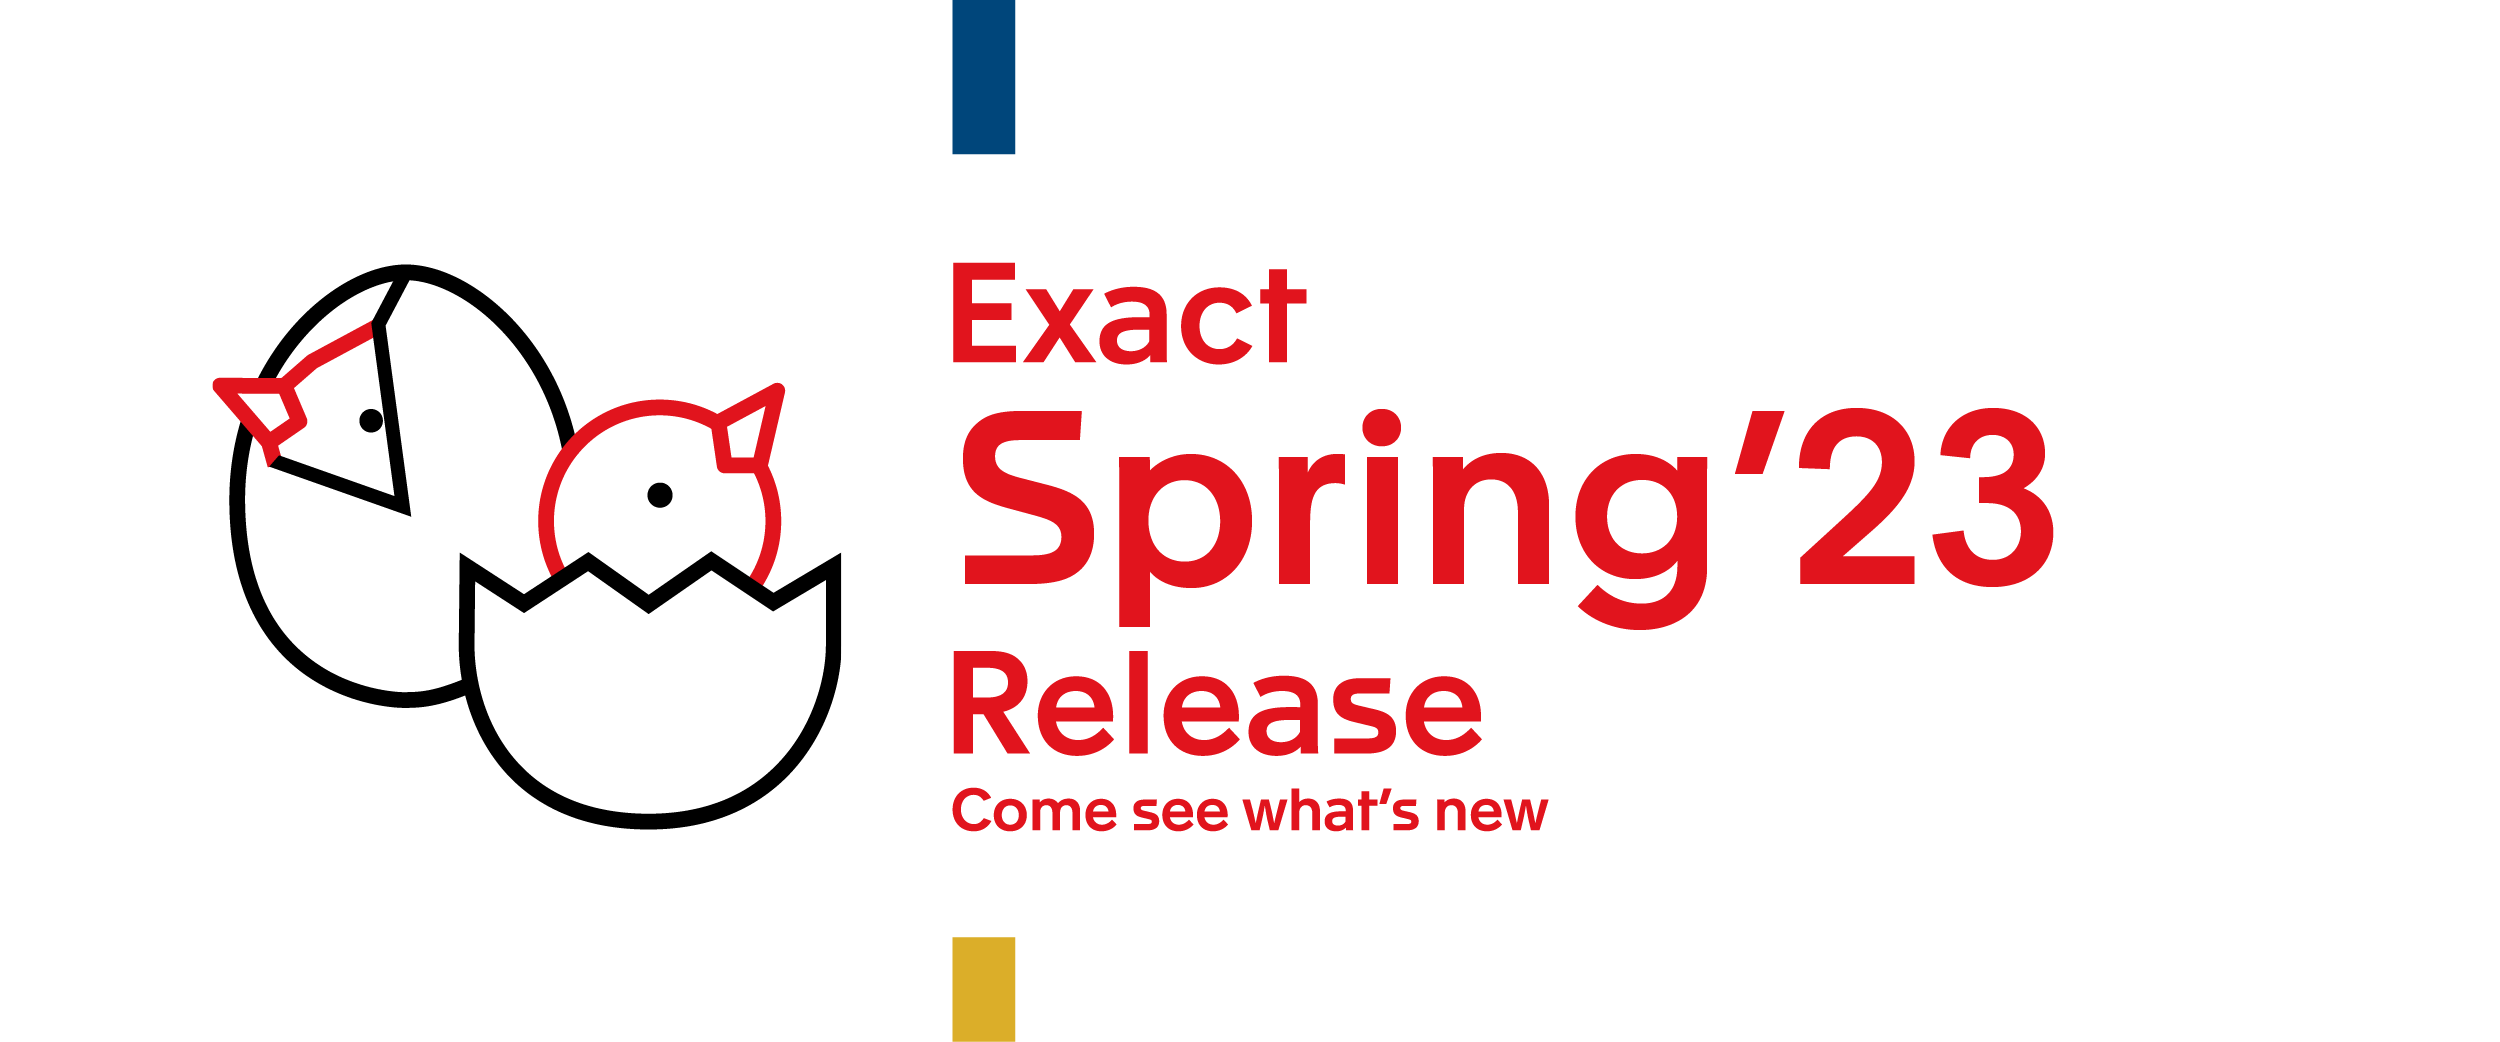 Exact Spring'23 Release